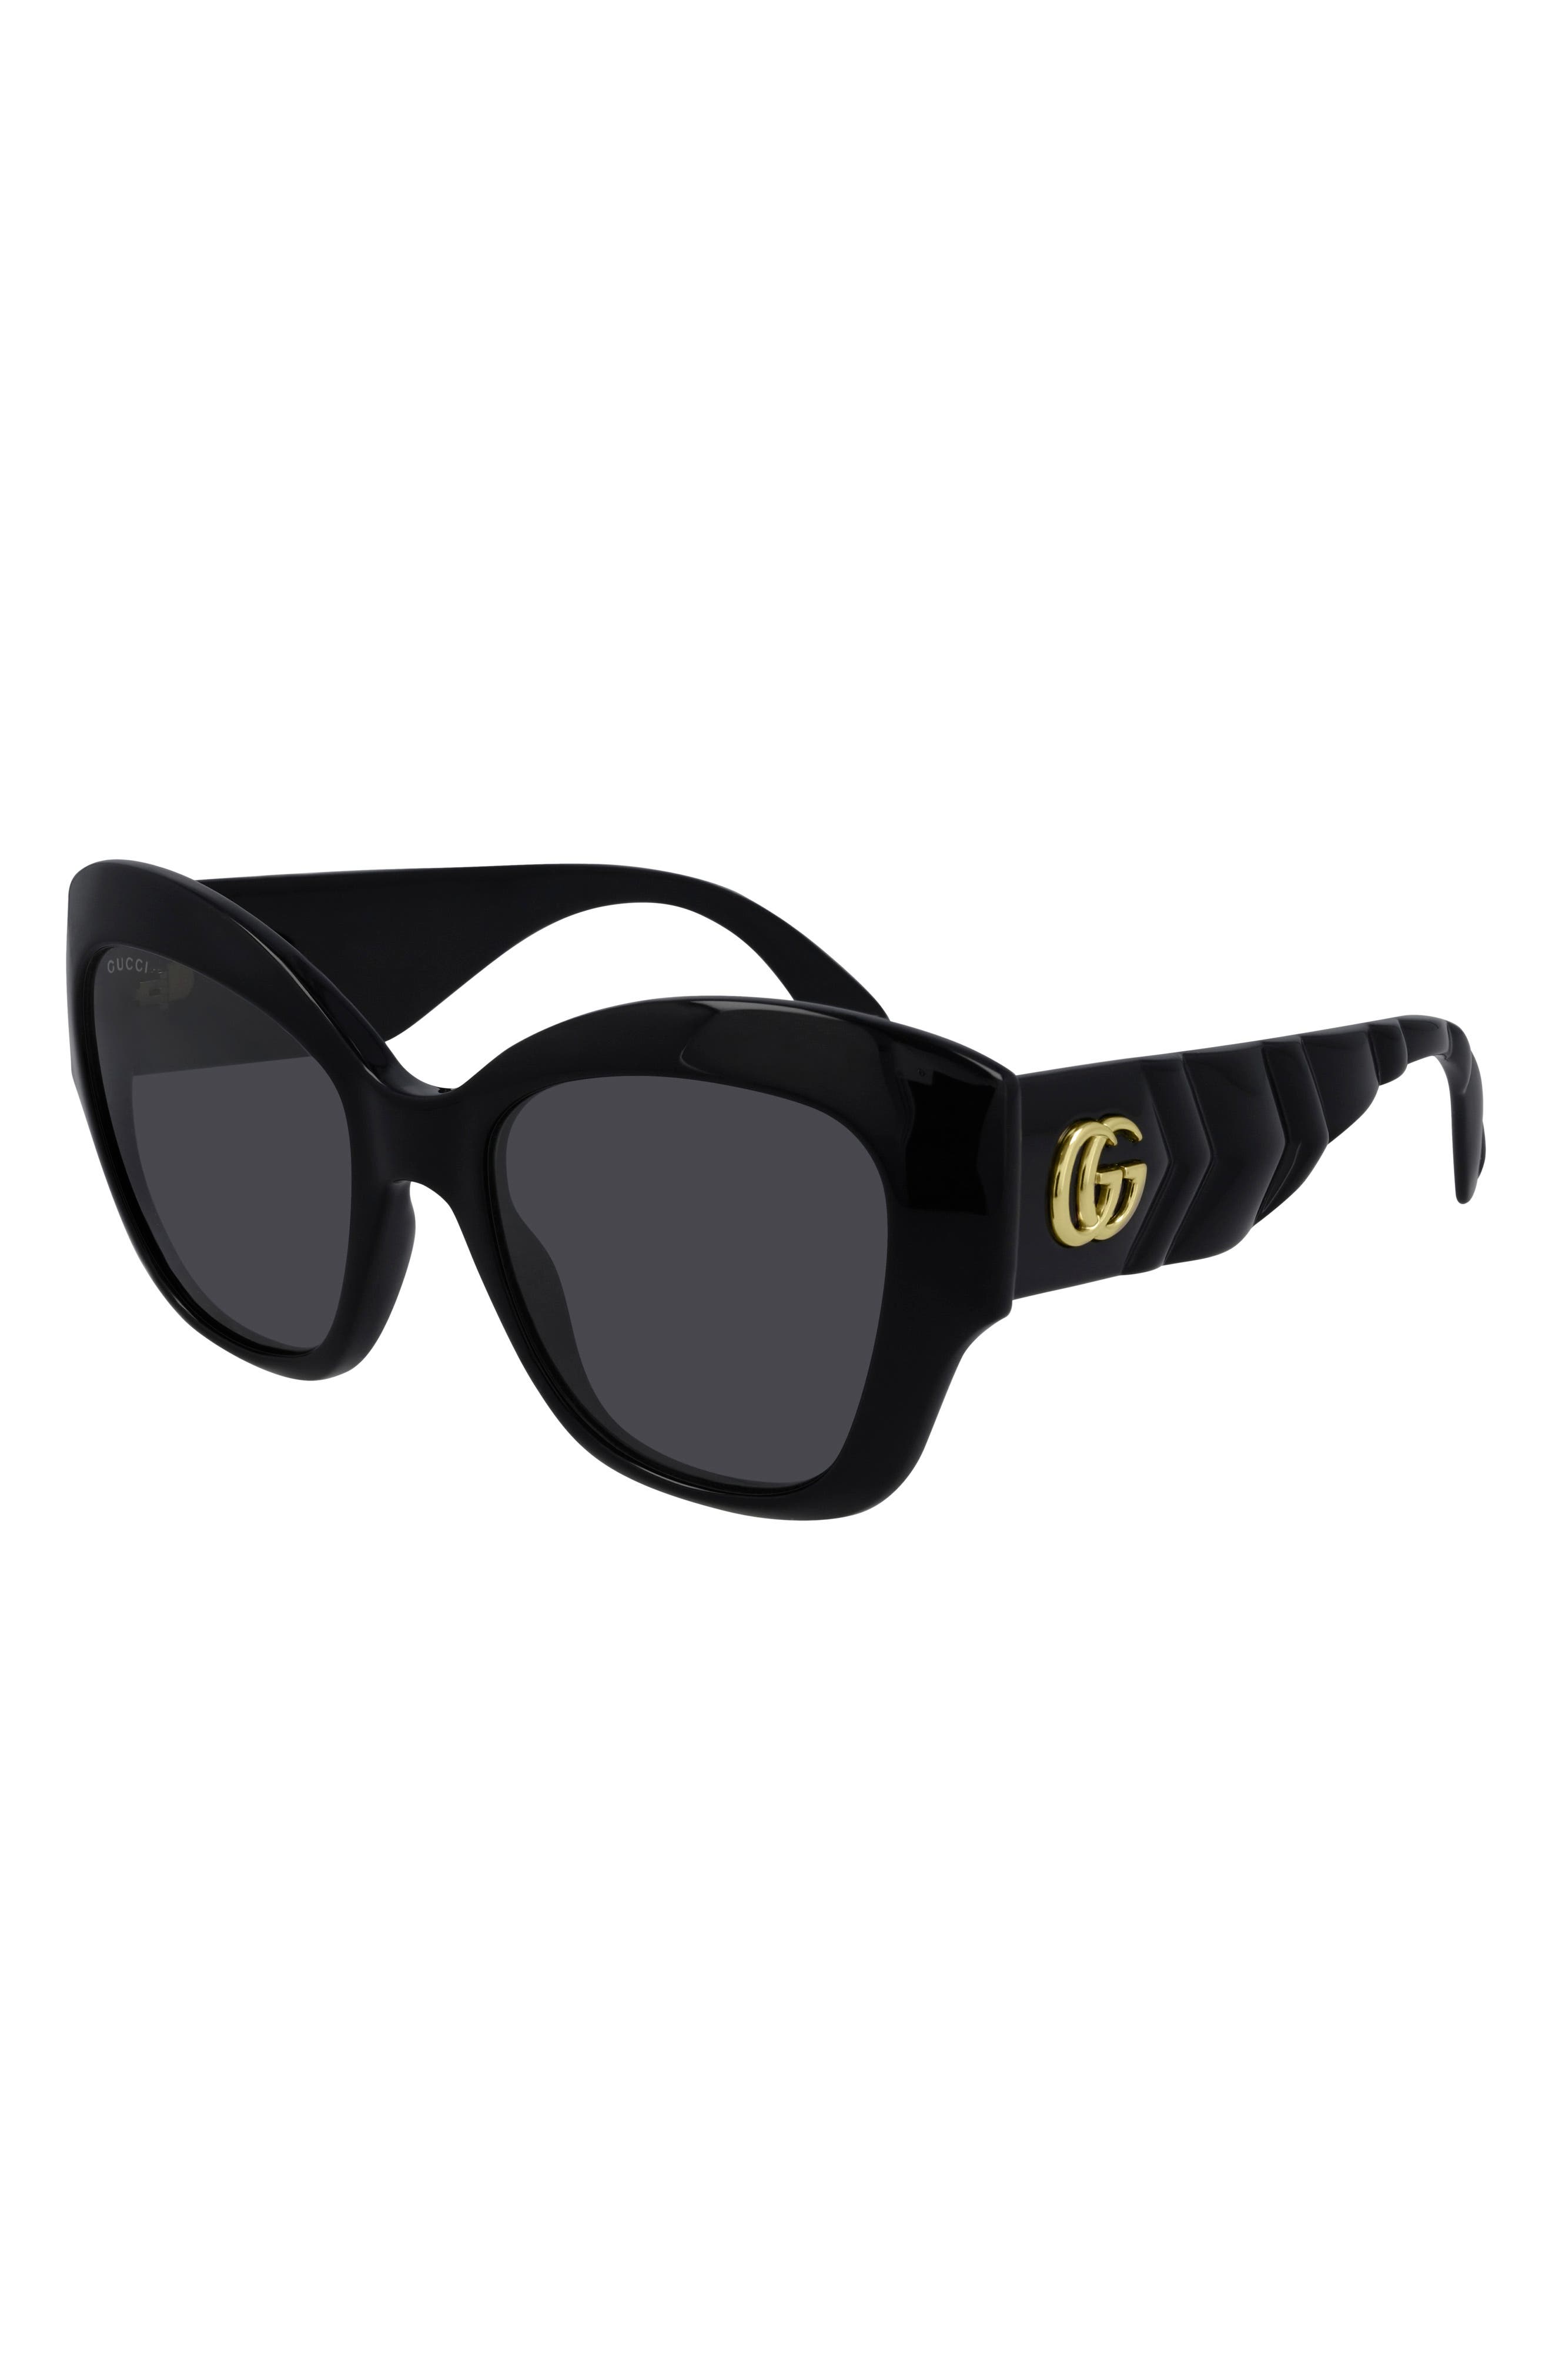 gucci oversized glasses